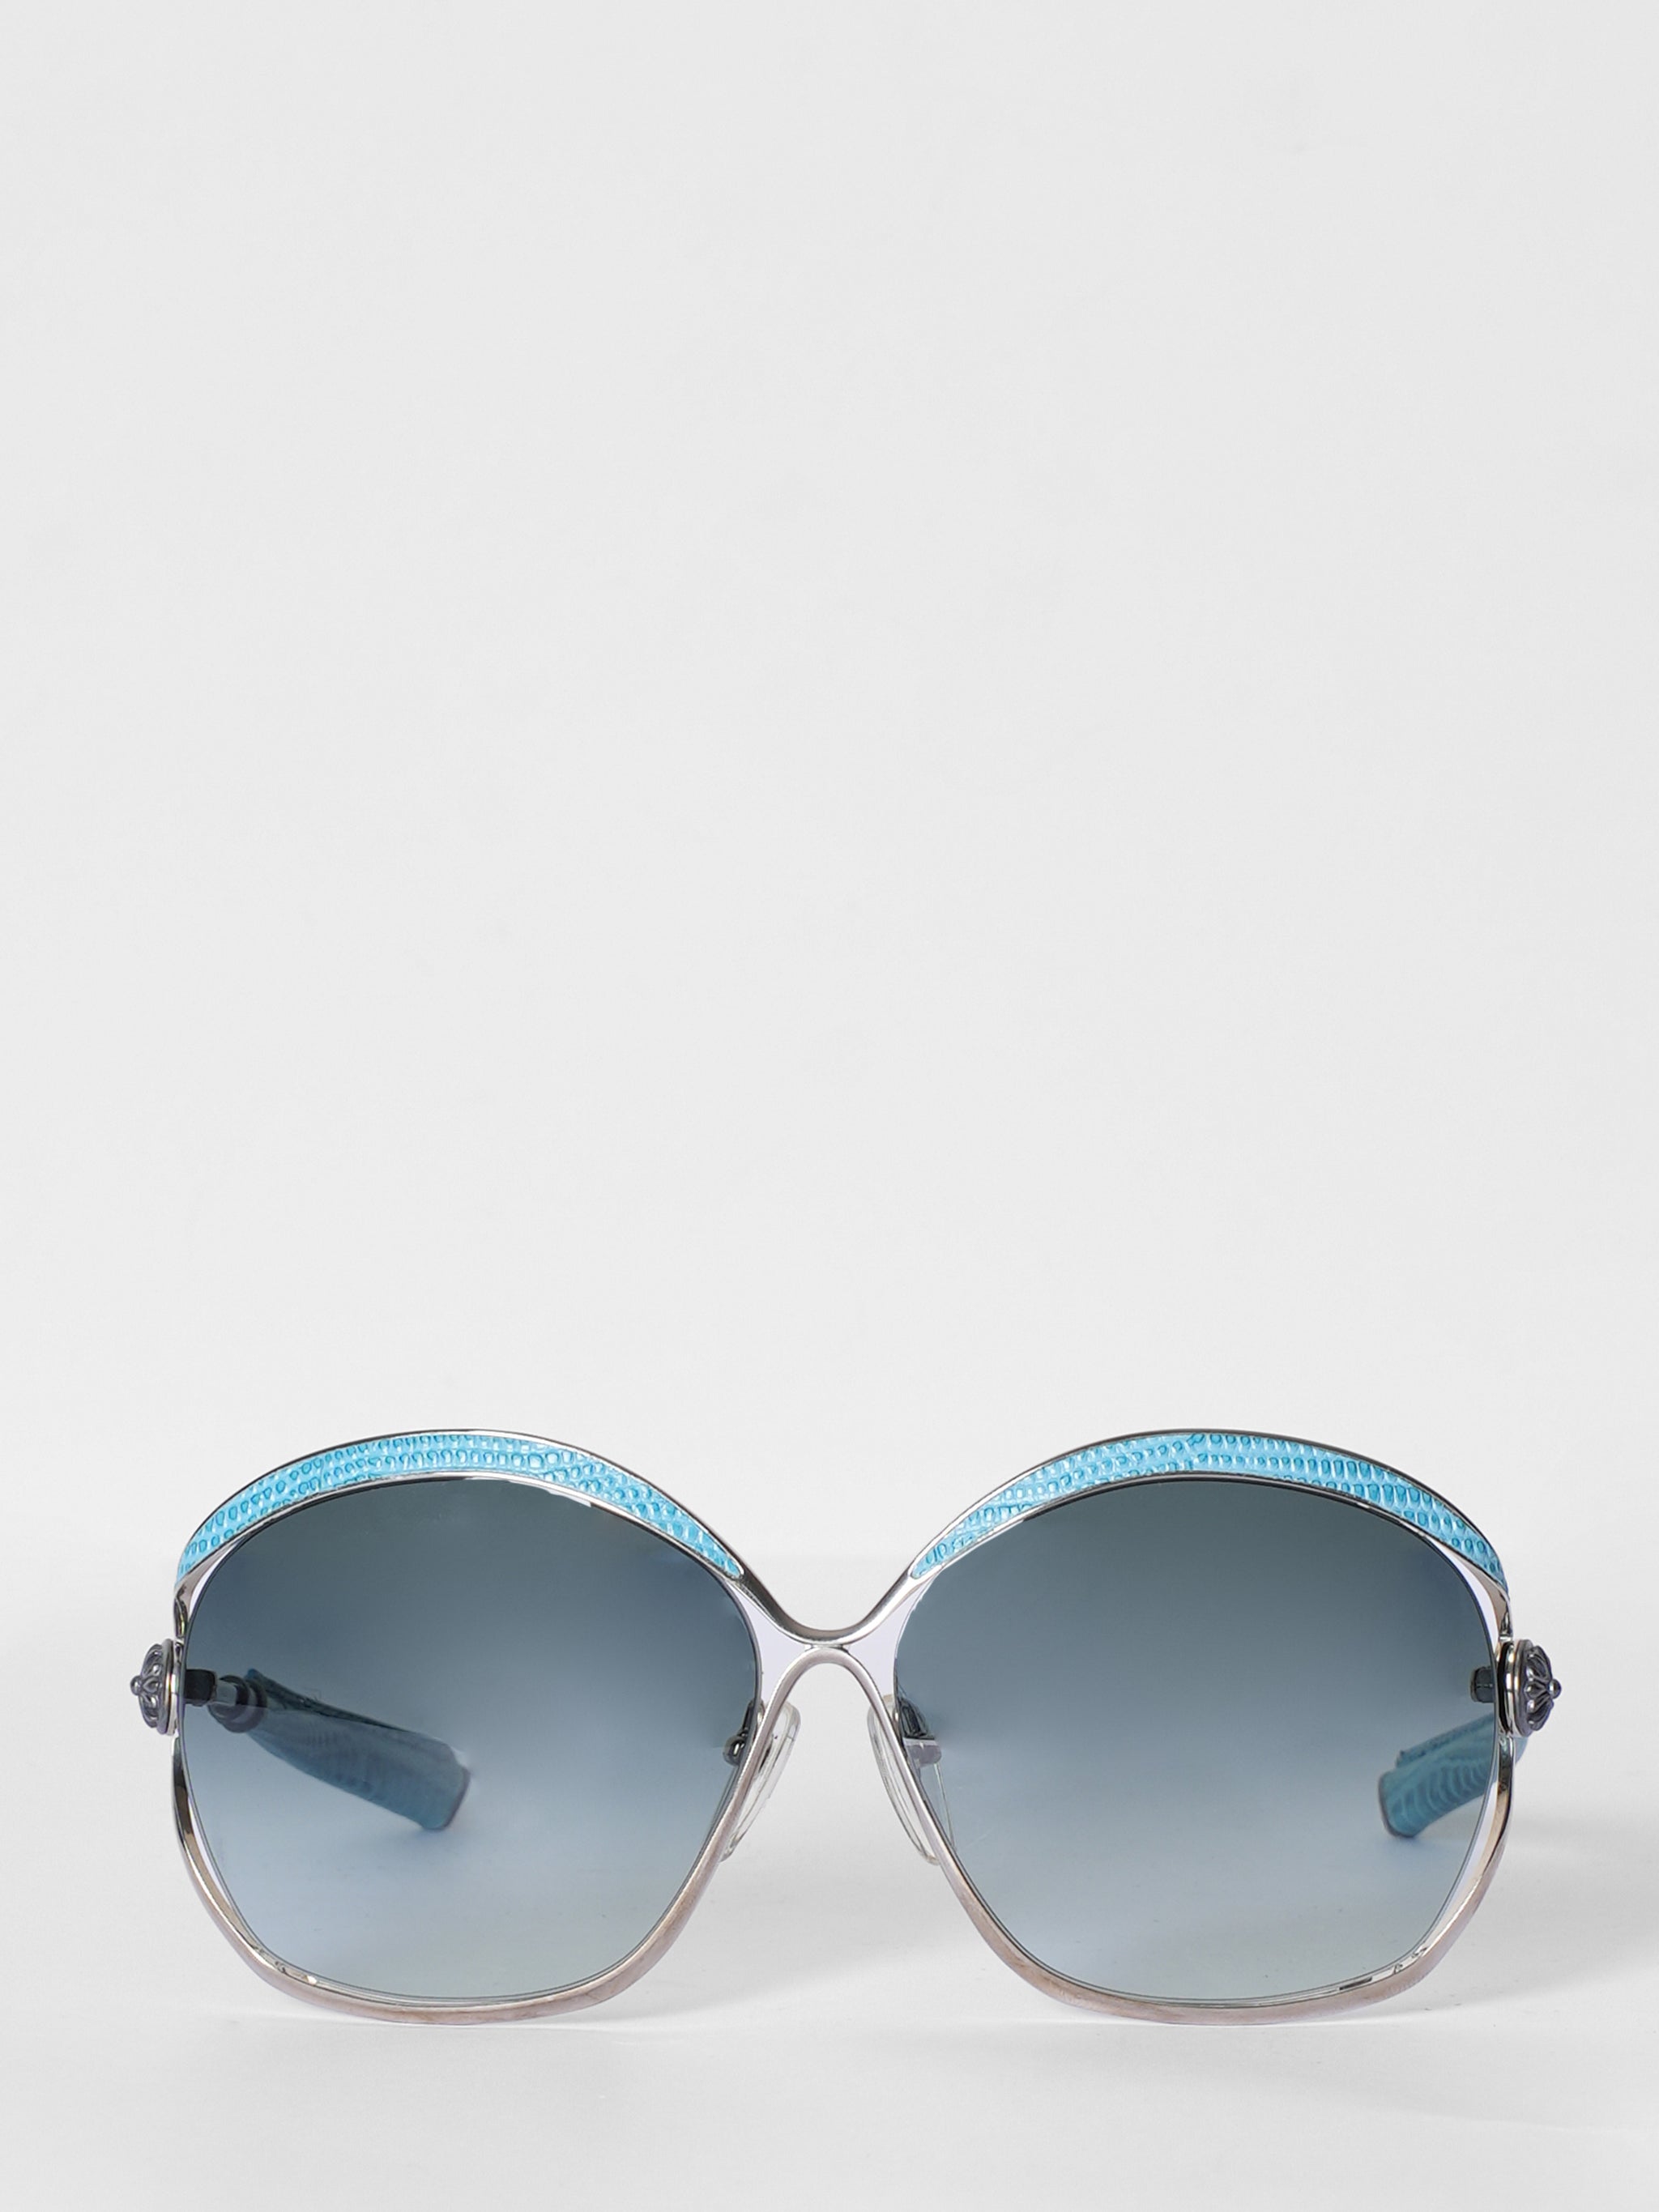 Chrome Hearts Fluffer Sunglasses